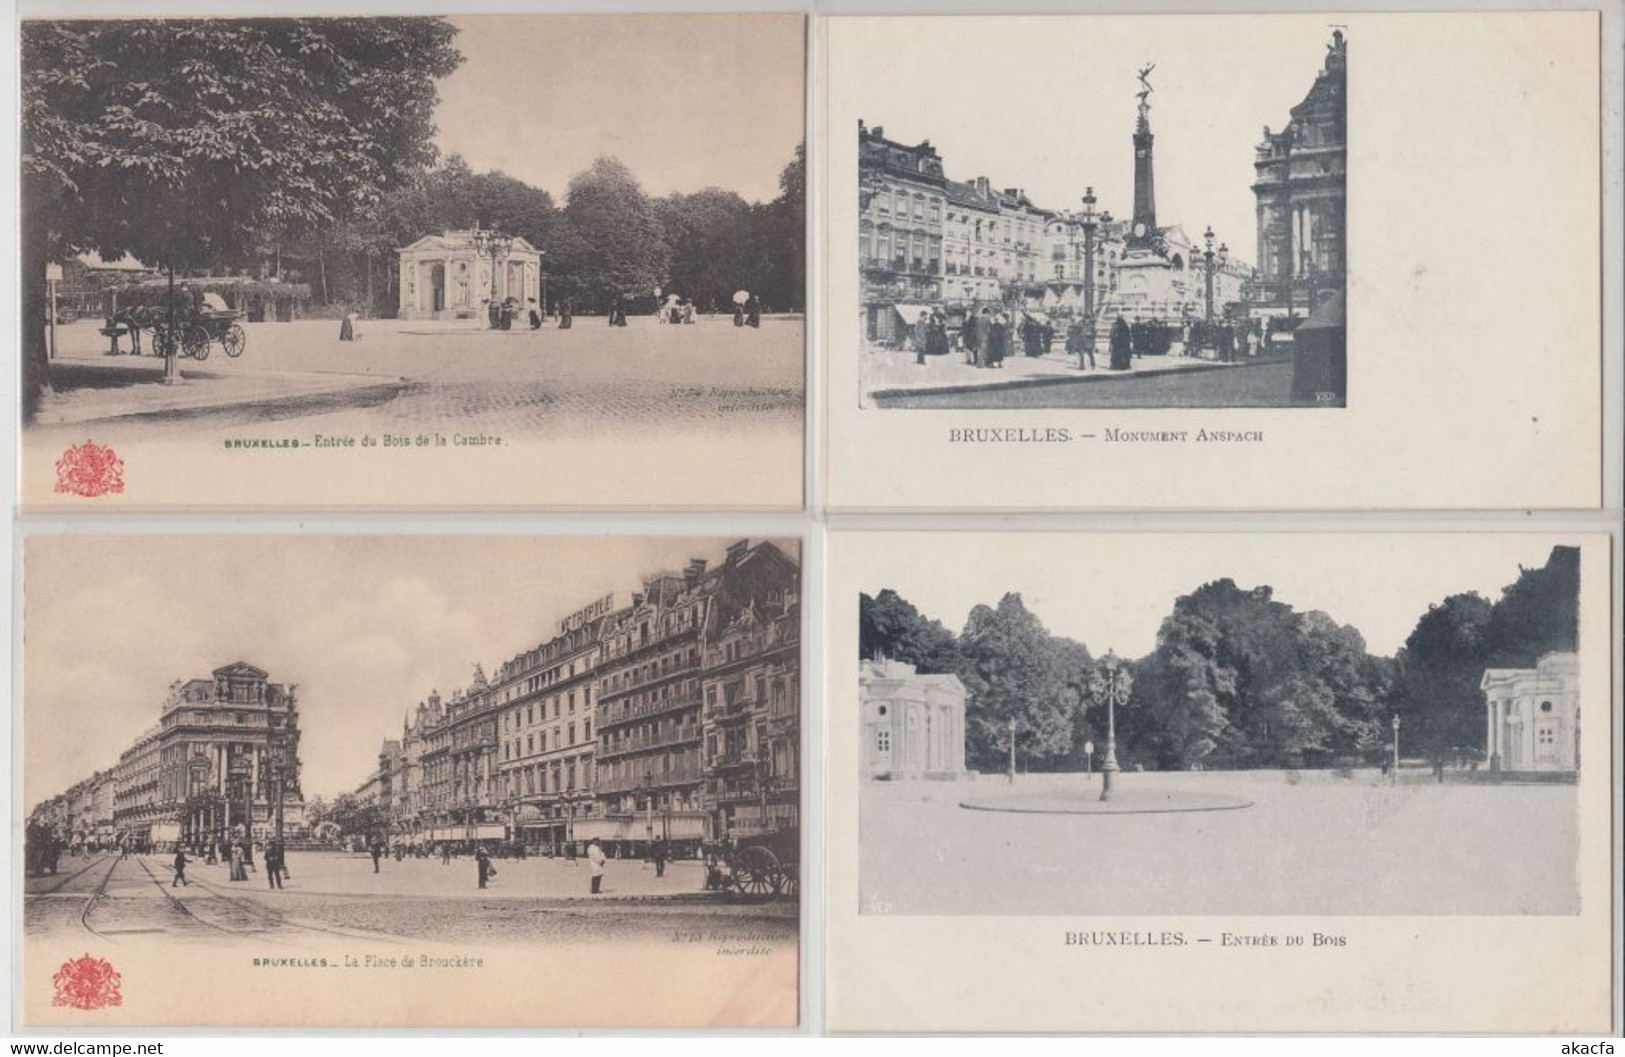 BRUSSELS BRUXELLES BELGIUM 222 Vintage Postcards Mostly Pre-1920 (L5915) - Sammlungen & Sammellose